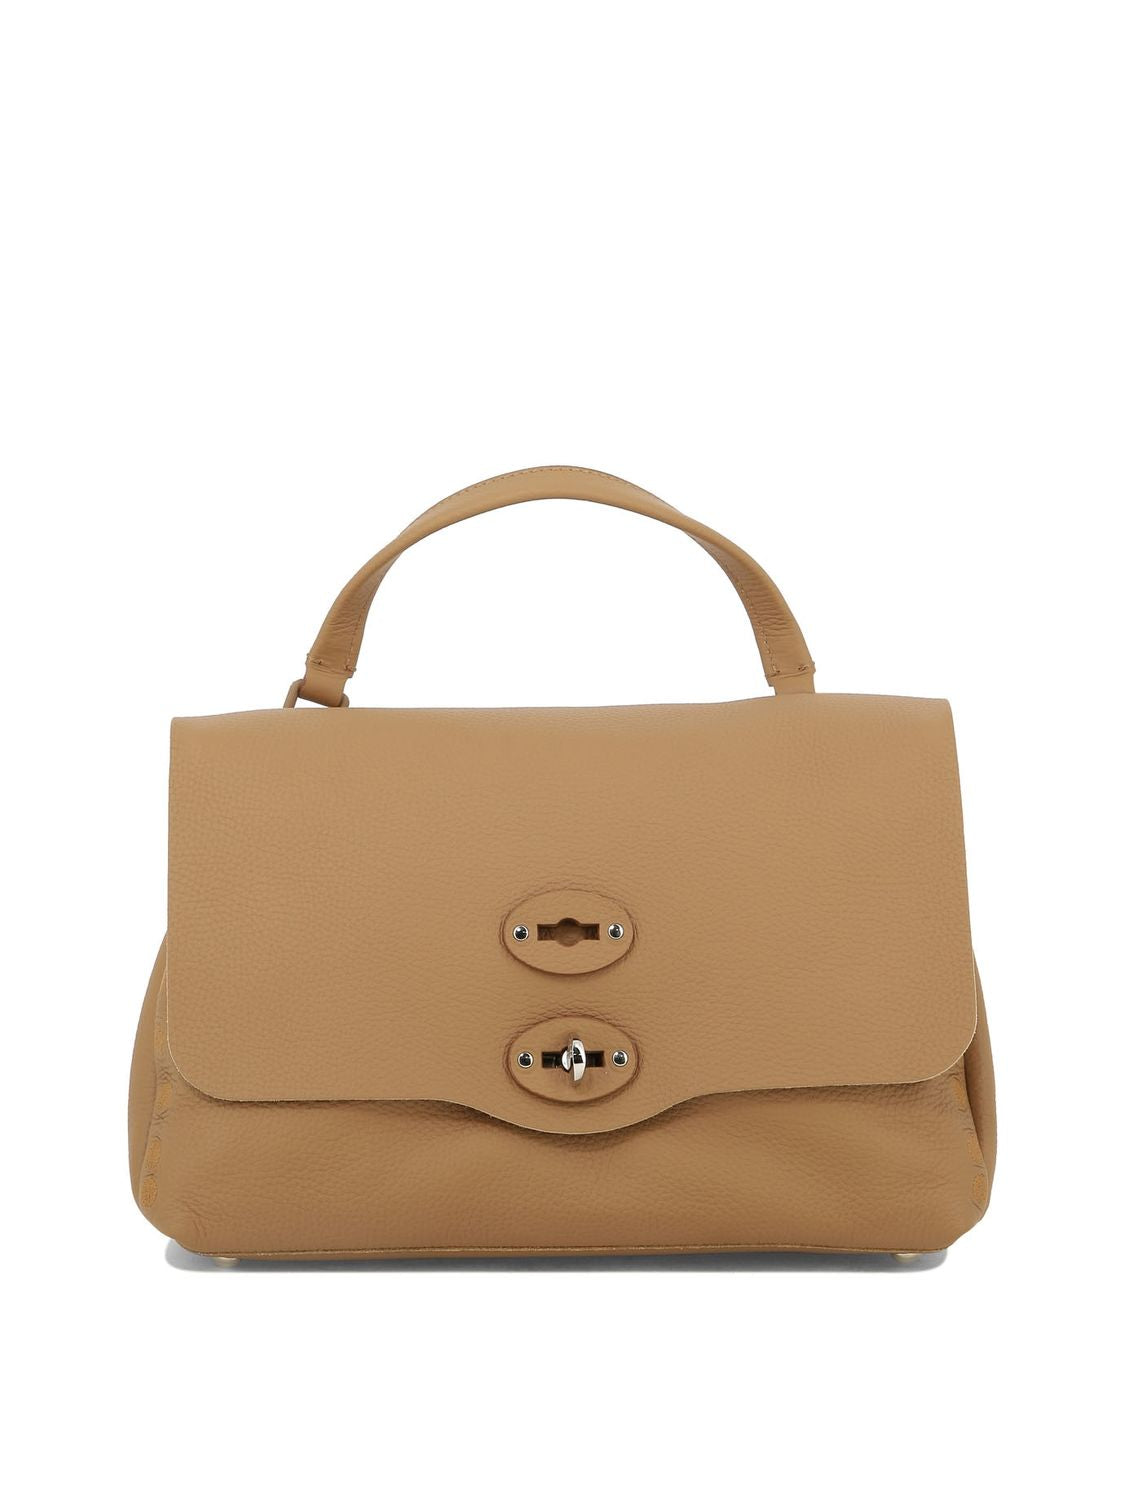 ZANELLATO Luxurious Brown Leather Handbag for Stylish Women